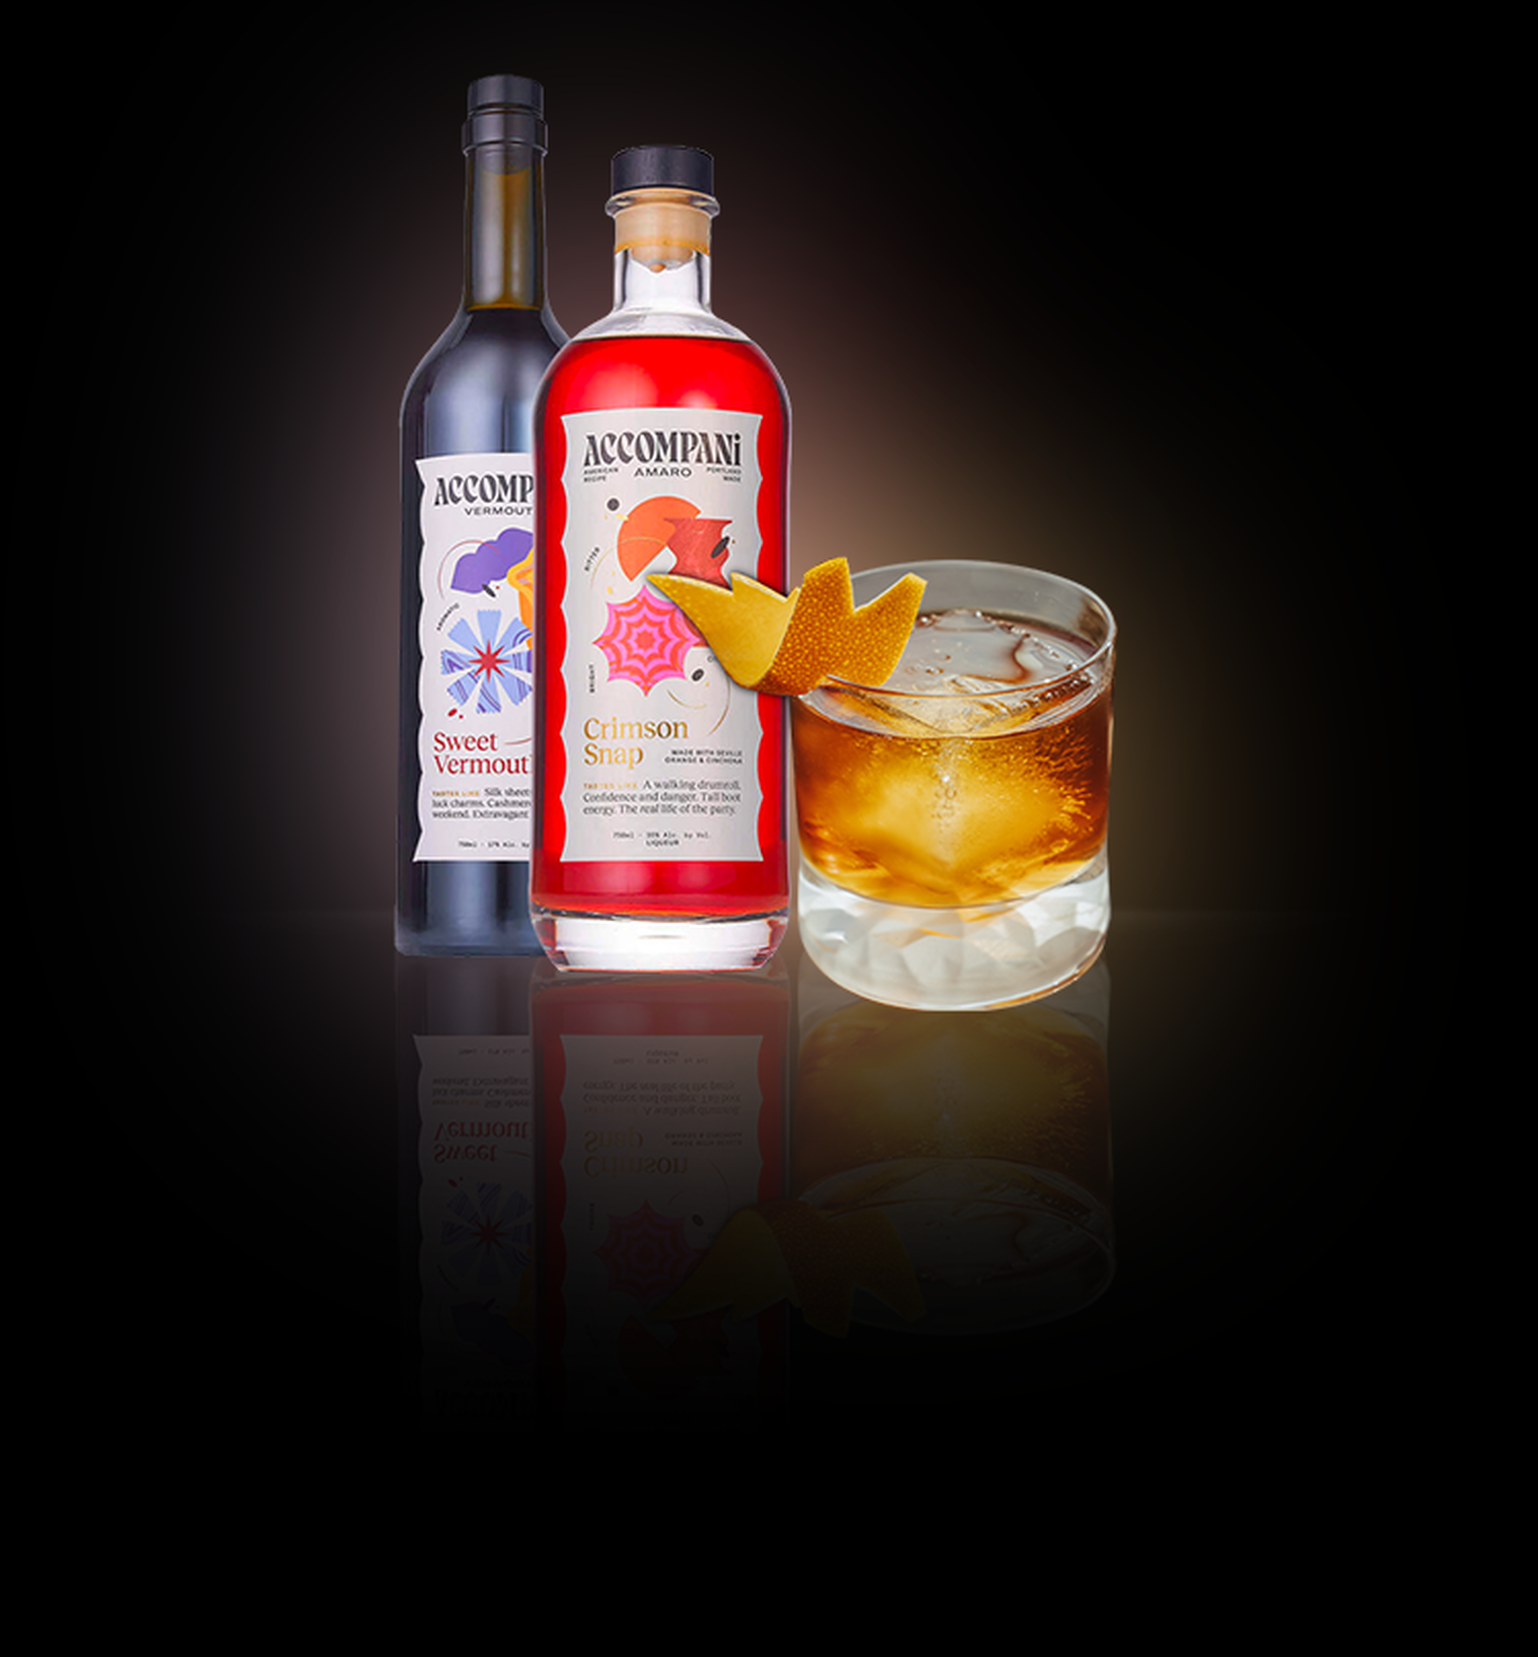 The Accompani Boulevardier Cocktail